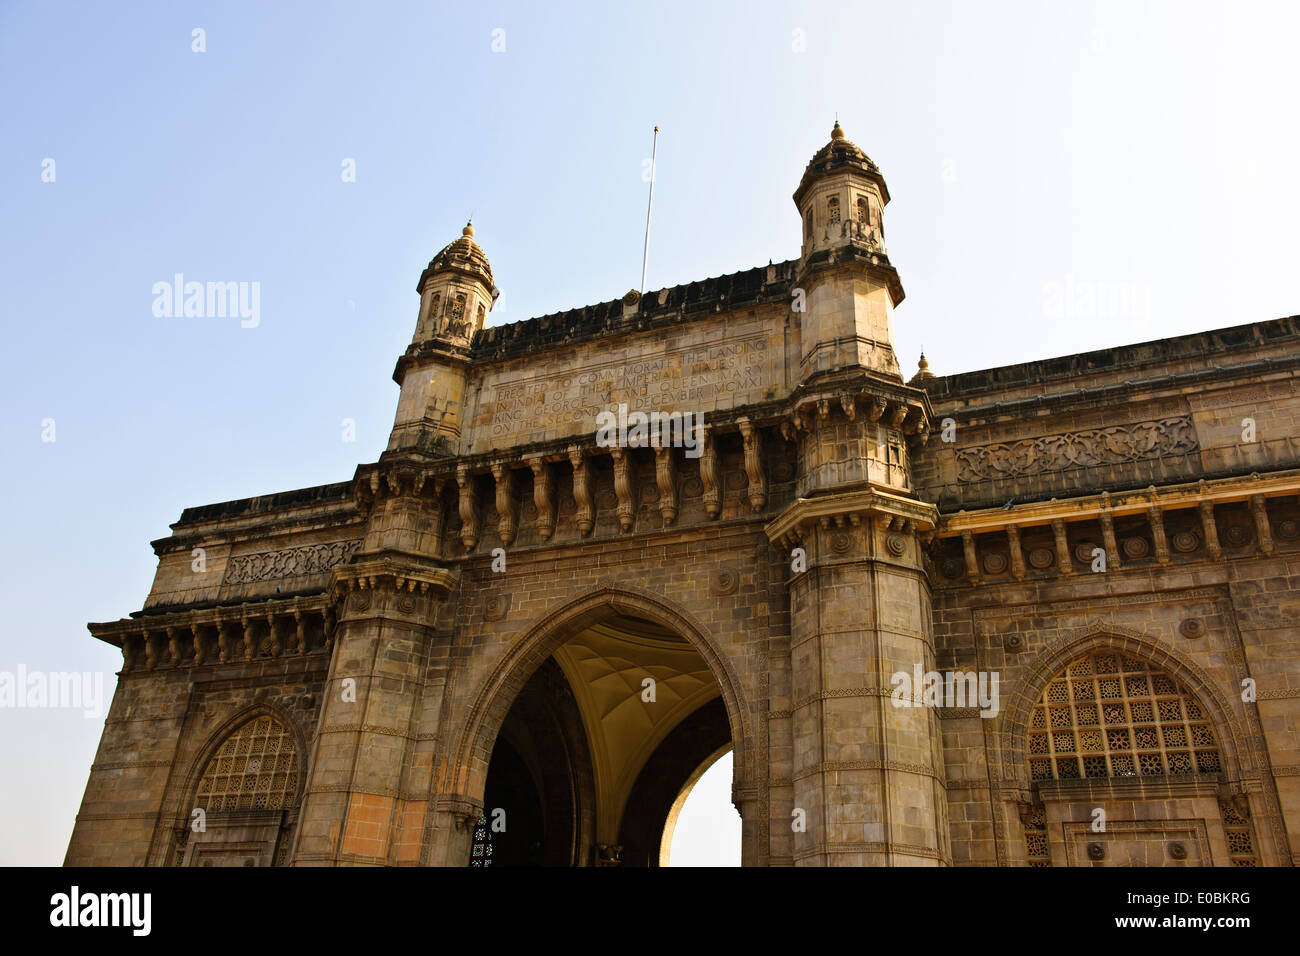 Gate of India,Appollo Bunder,Square,Tourists,School Children in Colorful Saris,promenade,Ferry terminal,Bombay,Mumbai,India Stock Photo